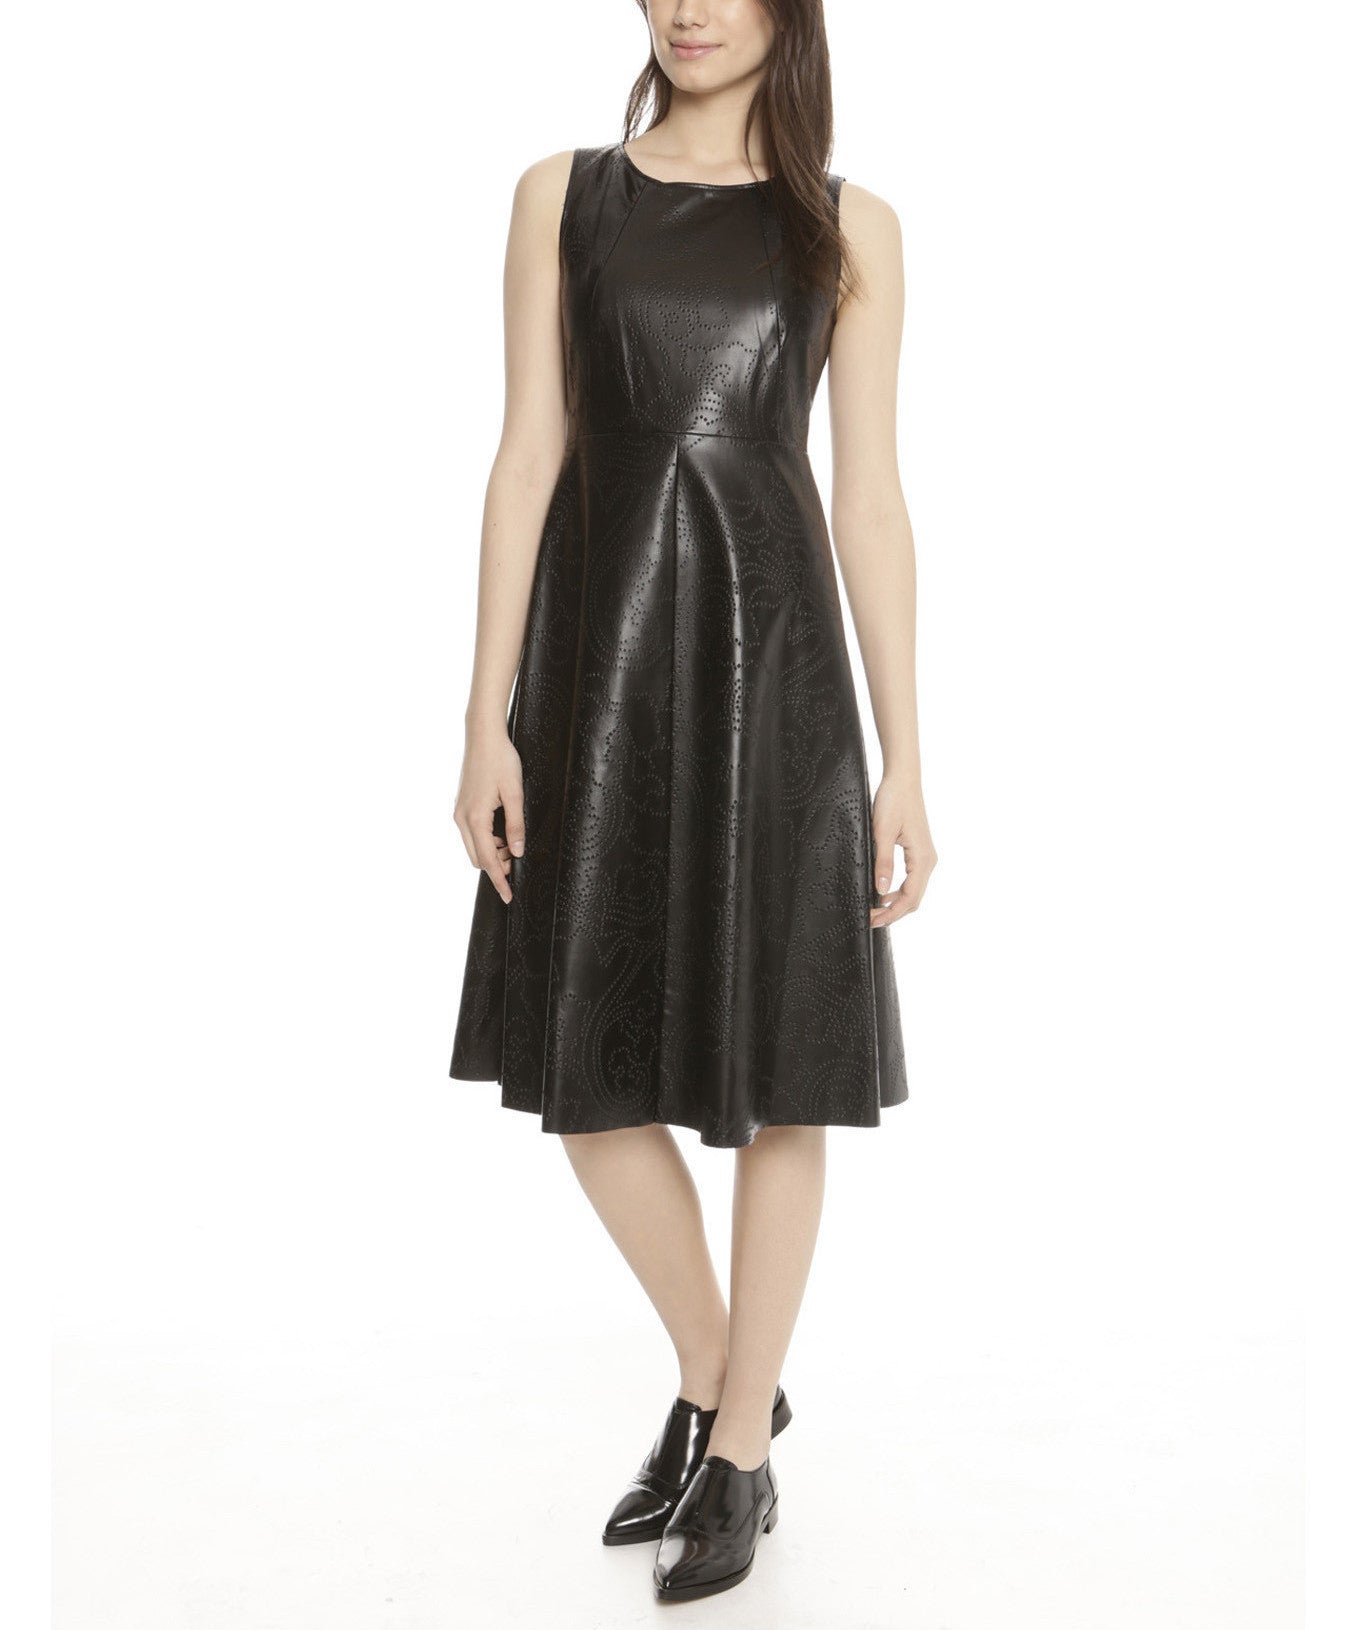 Black Faux Leather/Jersey Dress - CURATORZ